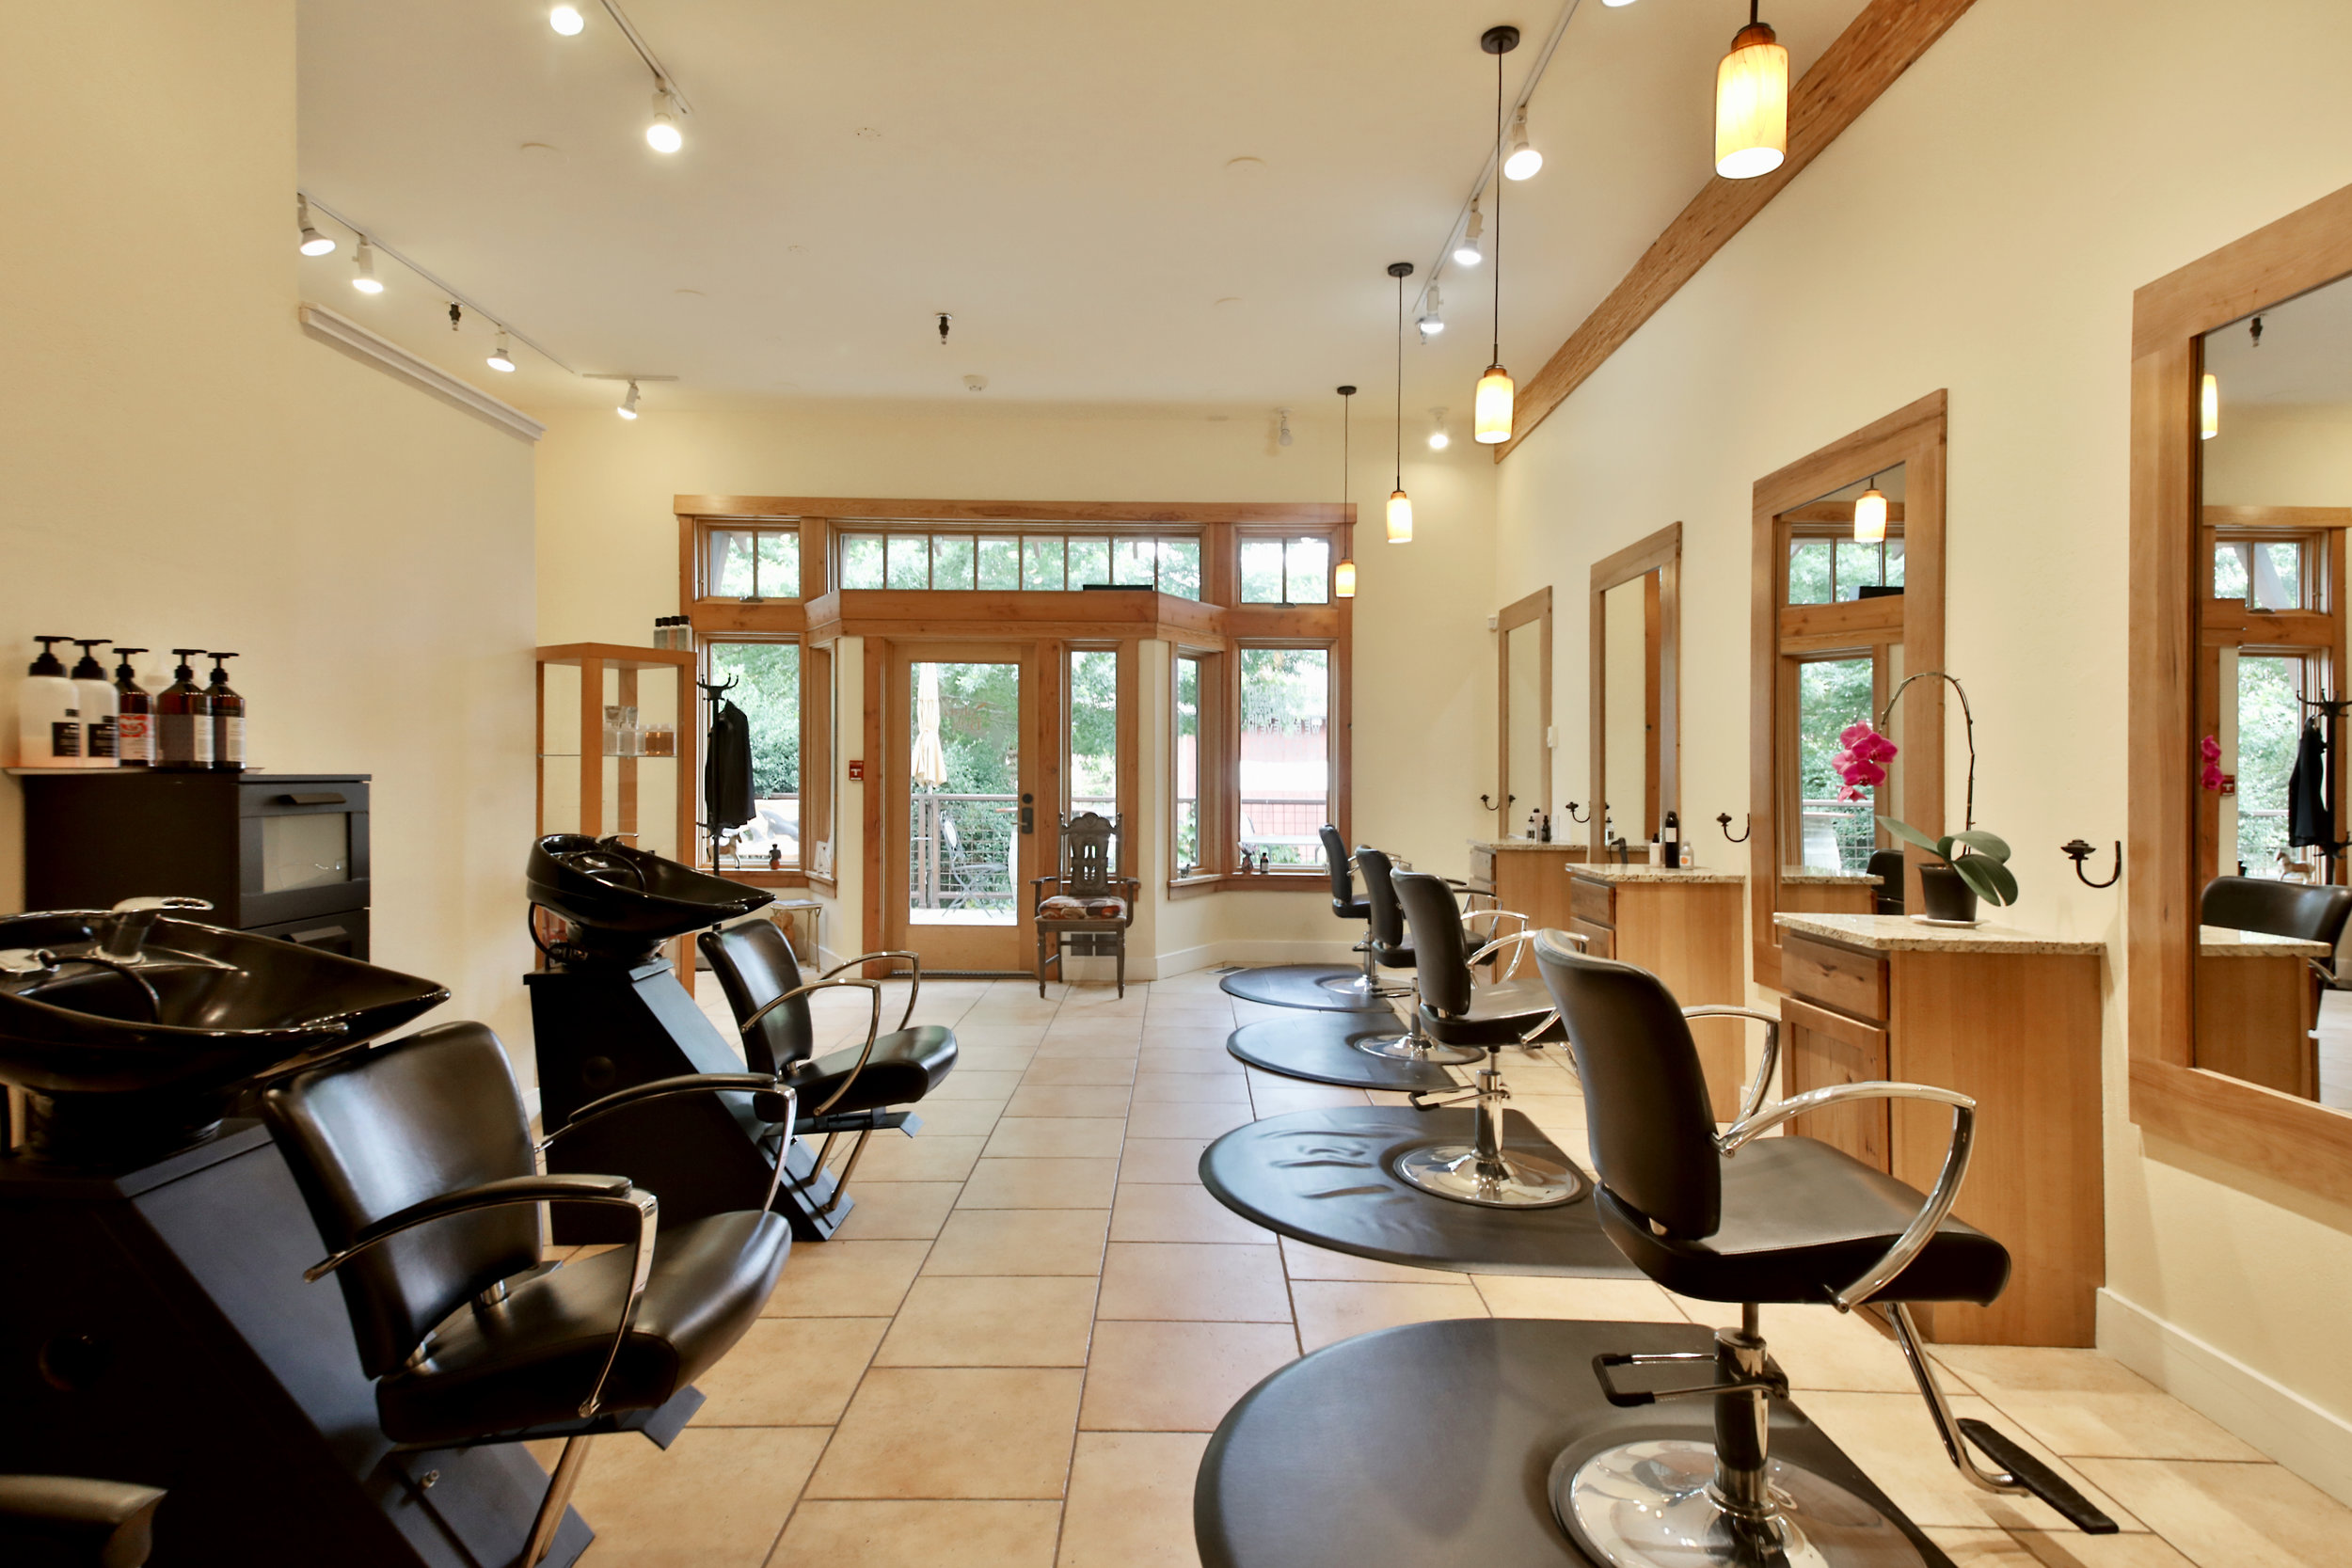 We are an upbeat, modern beauty and hair salon — Salon Bella